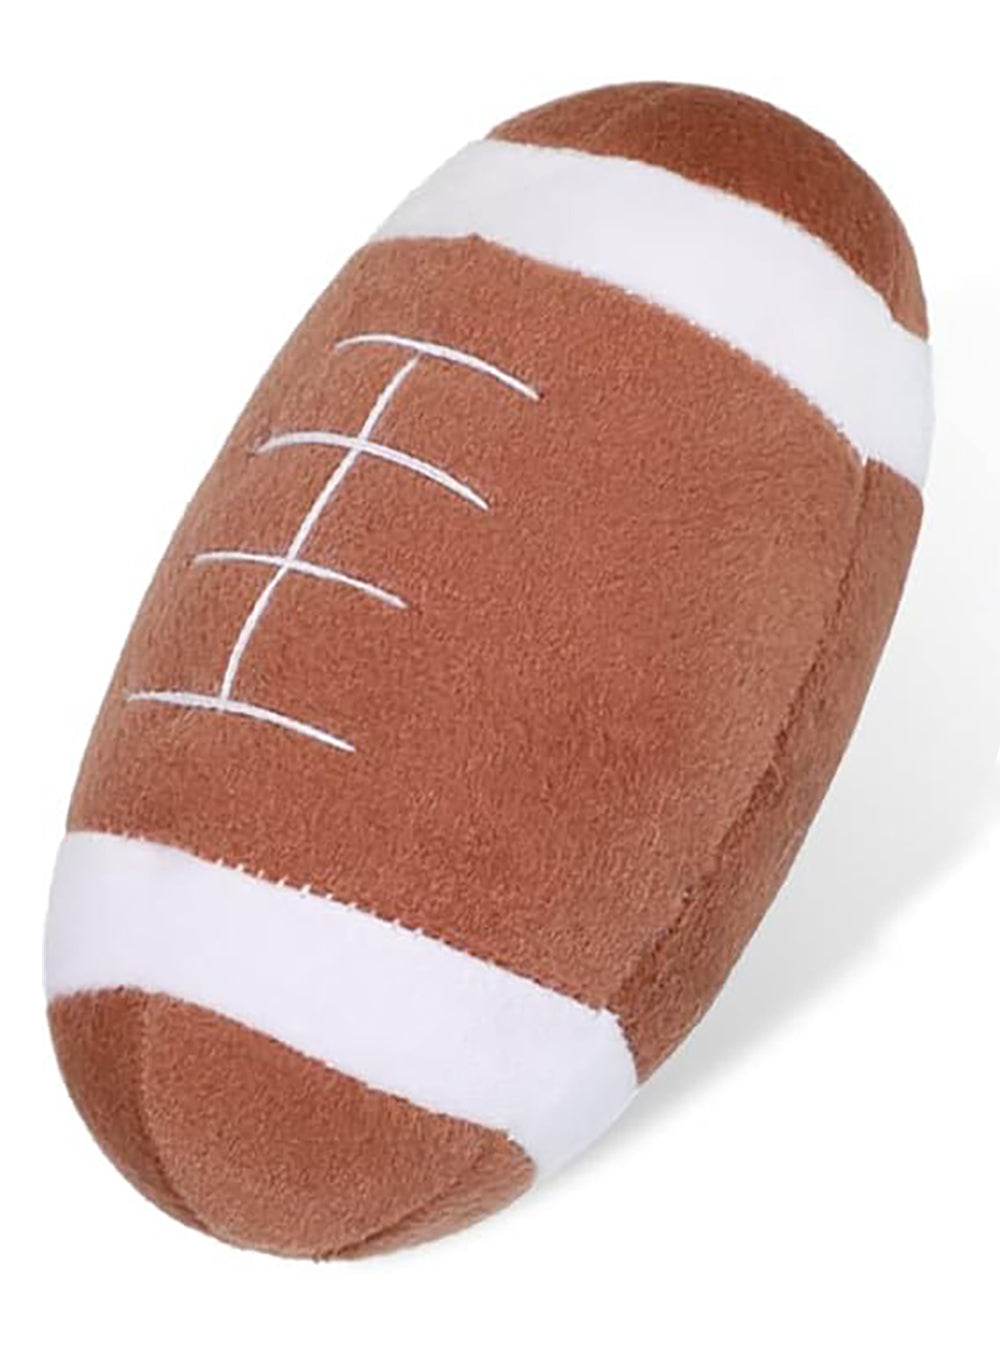 Football Dog Chew Toy